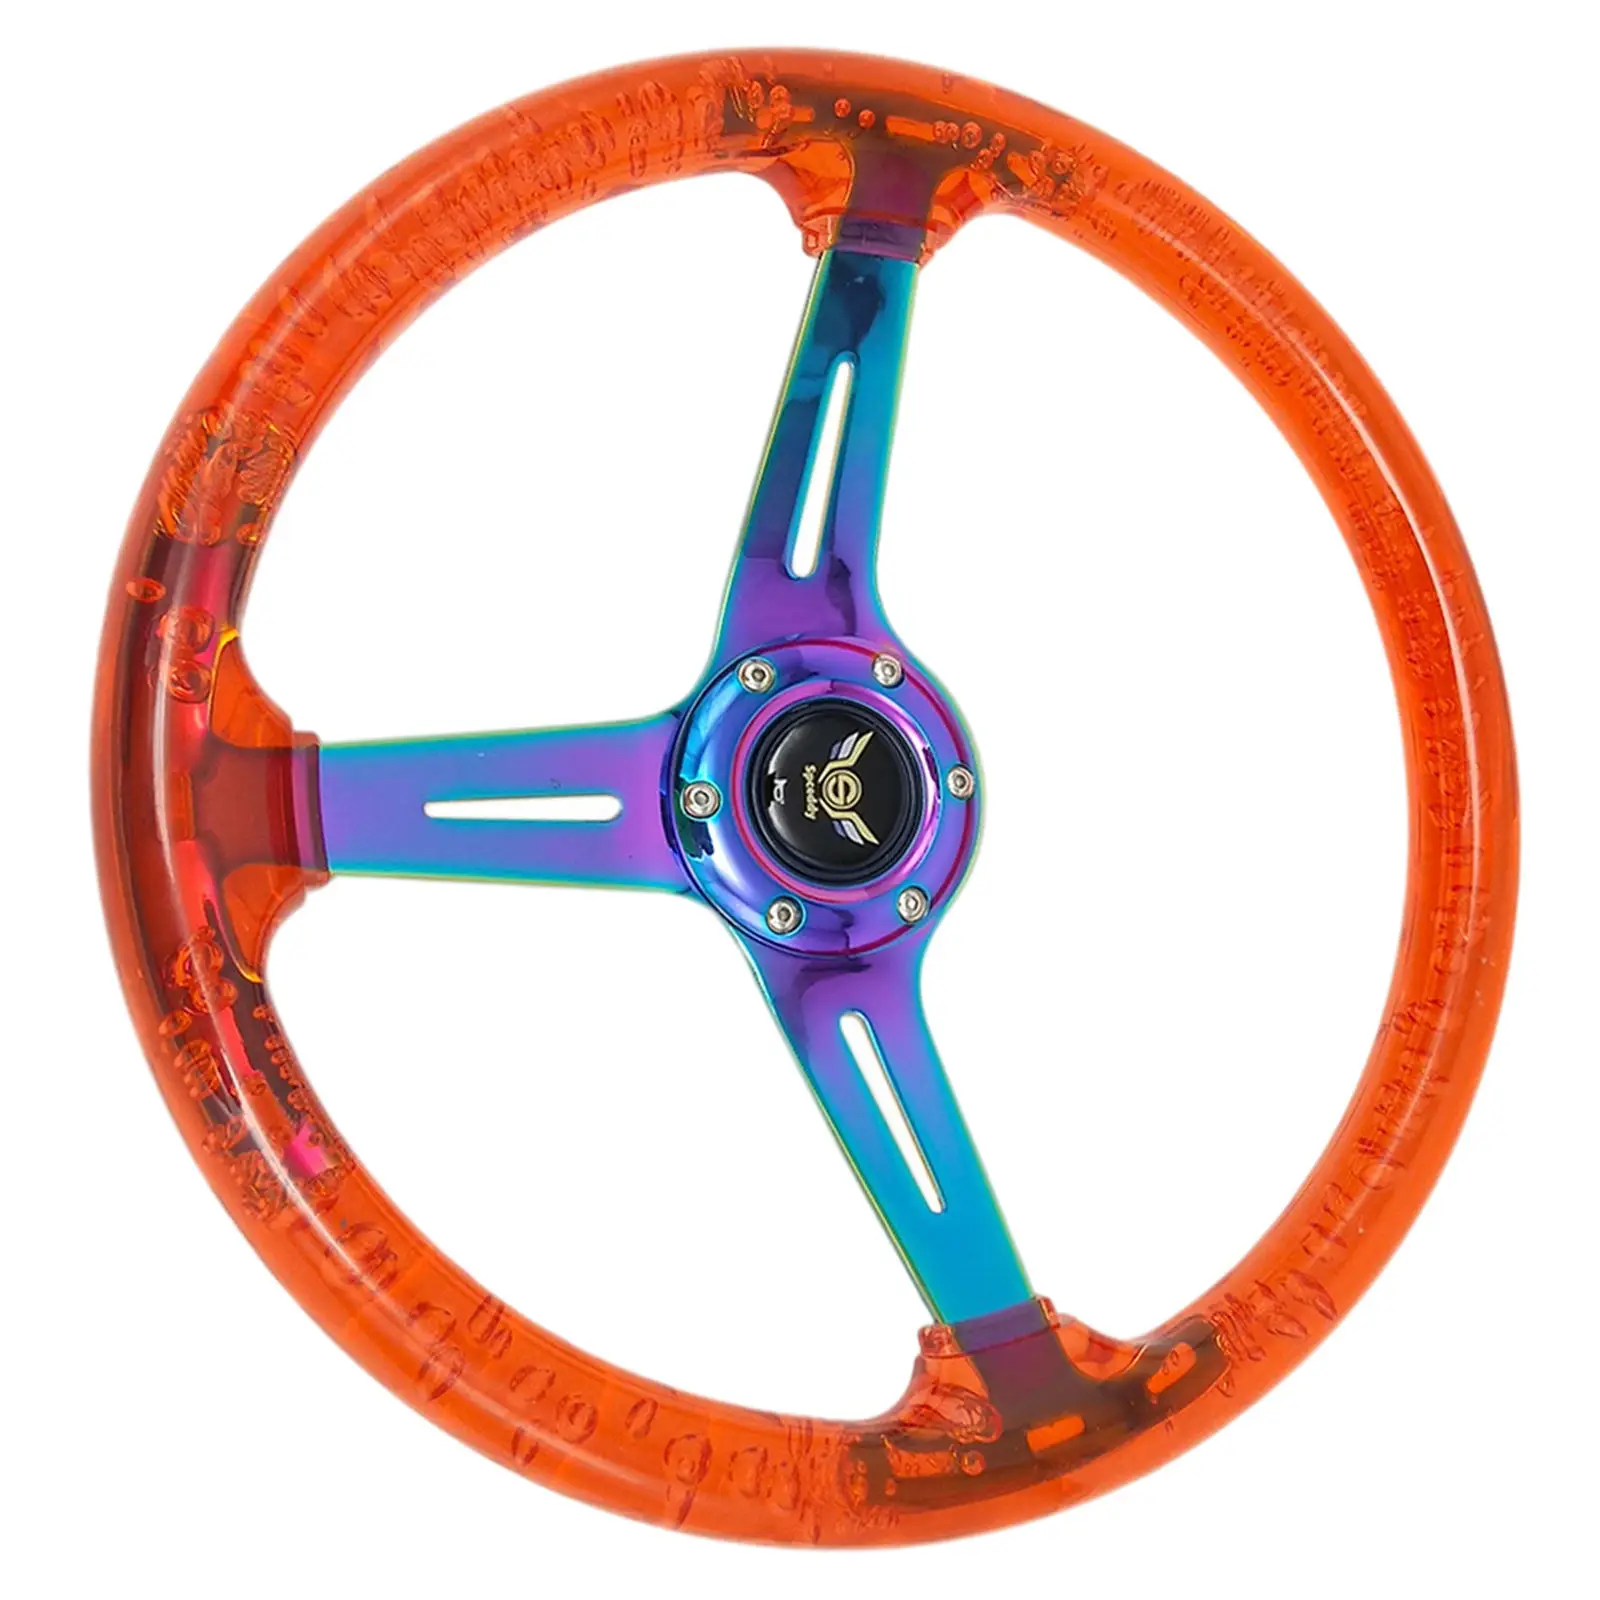 14`` Racing Steering Wheel for Race Car Car Interior Trim Modification Drifting Steering Wheel Accessories